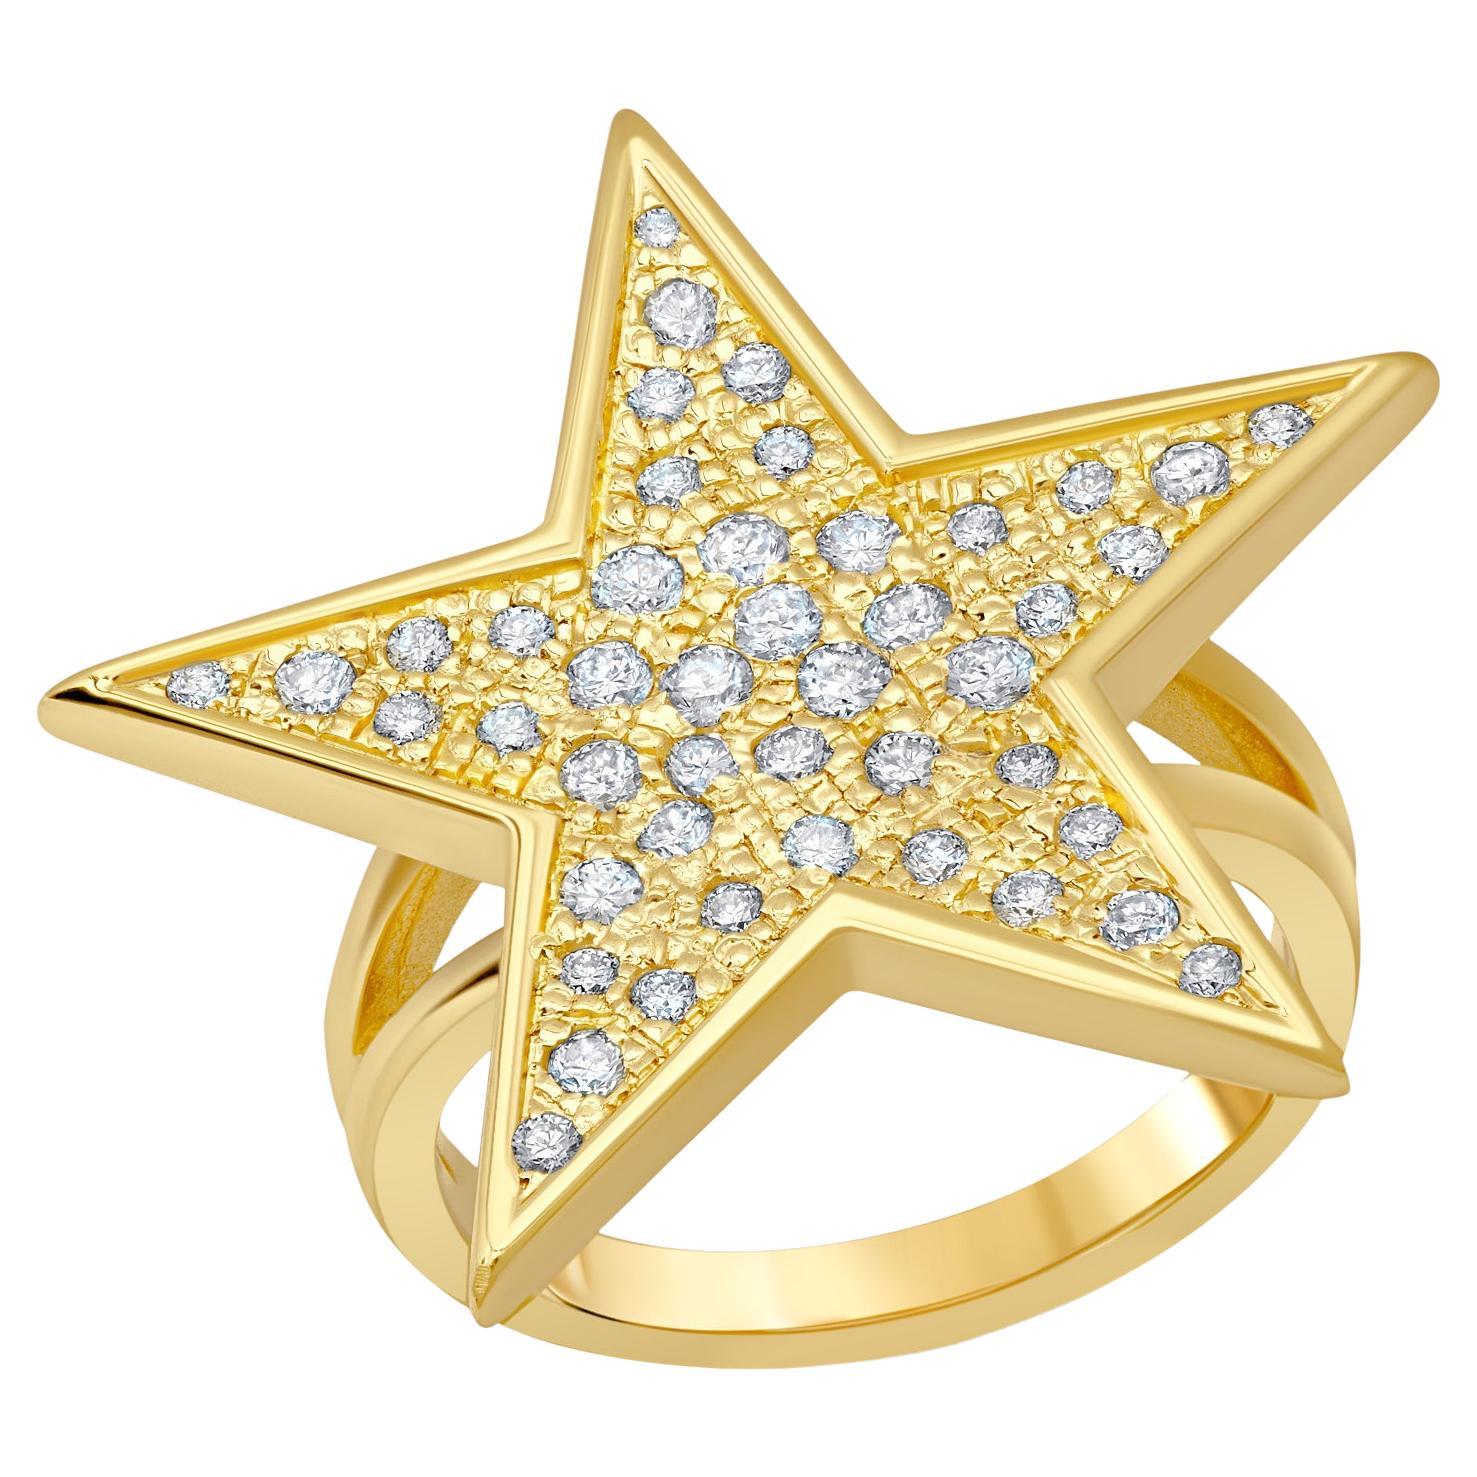 Avjx House of Design Ny Ring / Diamond 3d Star Design / 14K For Sale at ...